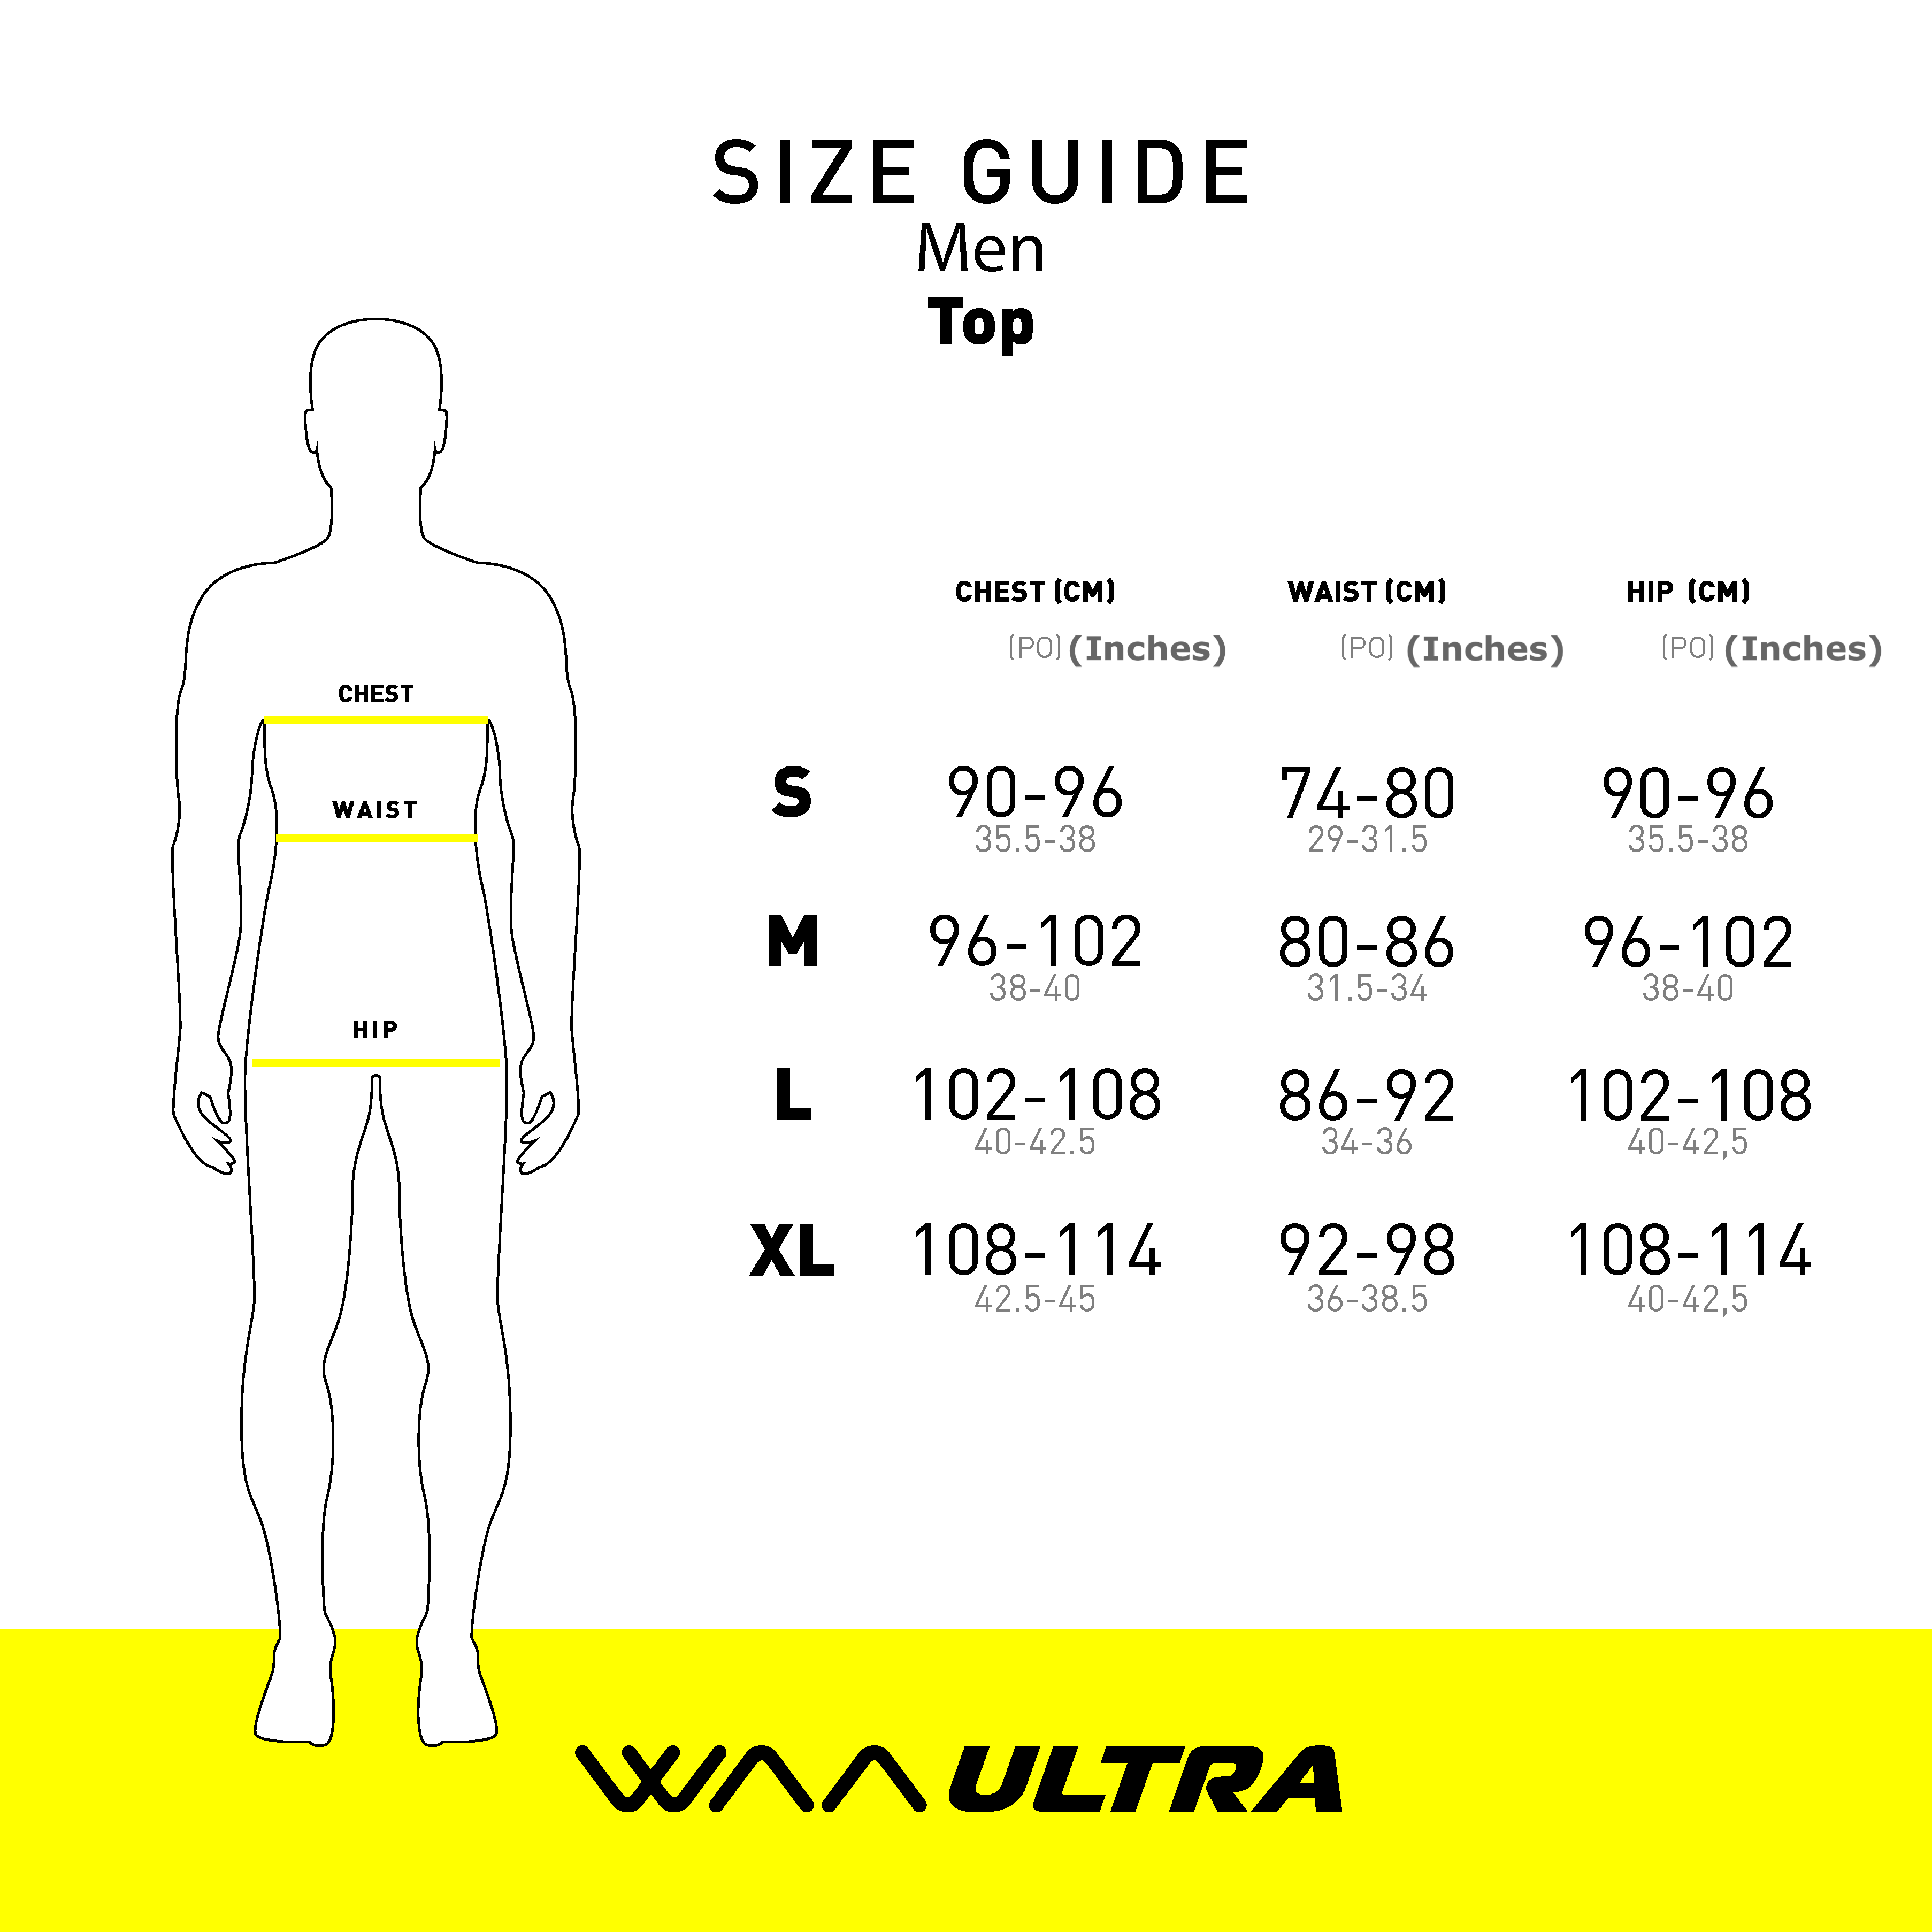 WAA Ultra Light T-Shirt - Classic WAA - Men's